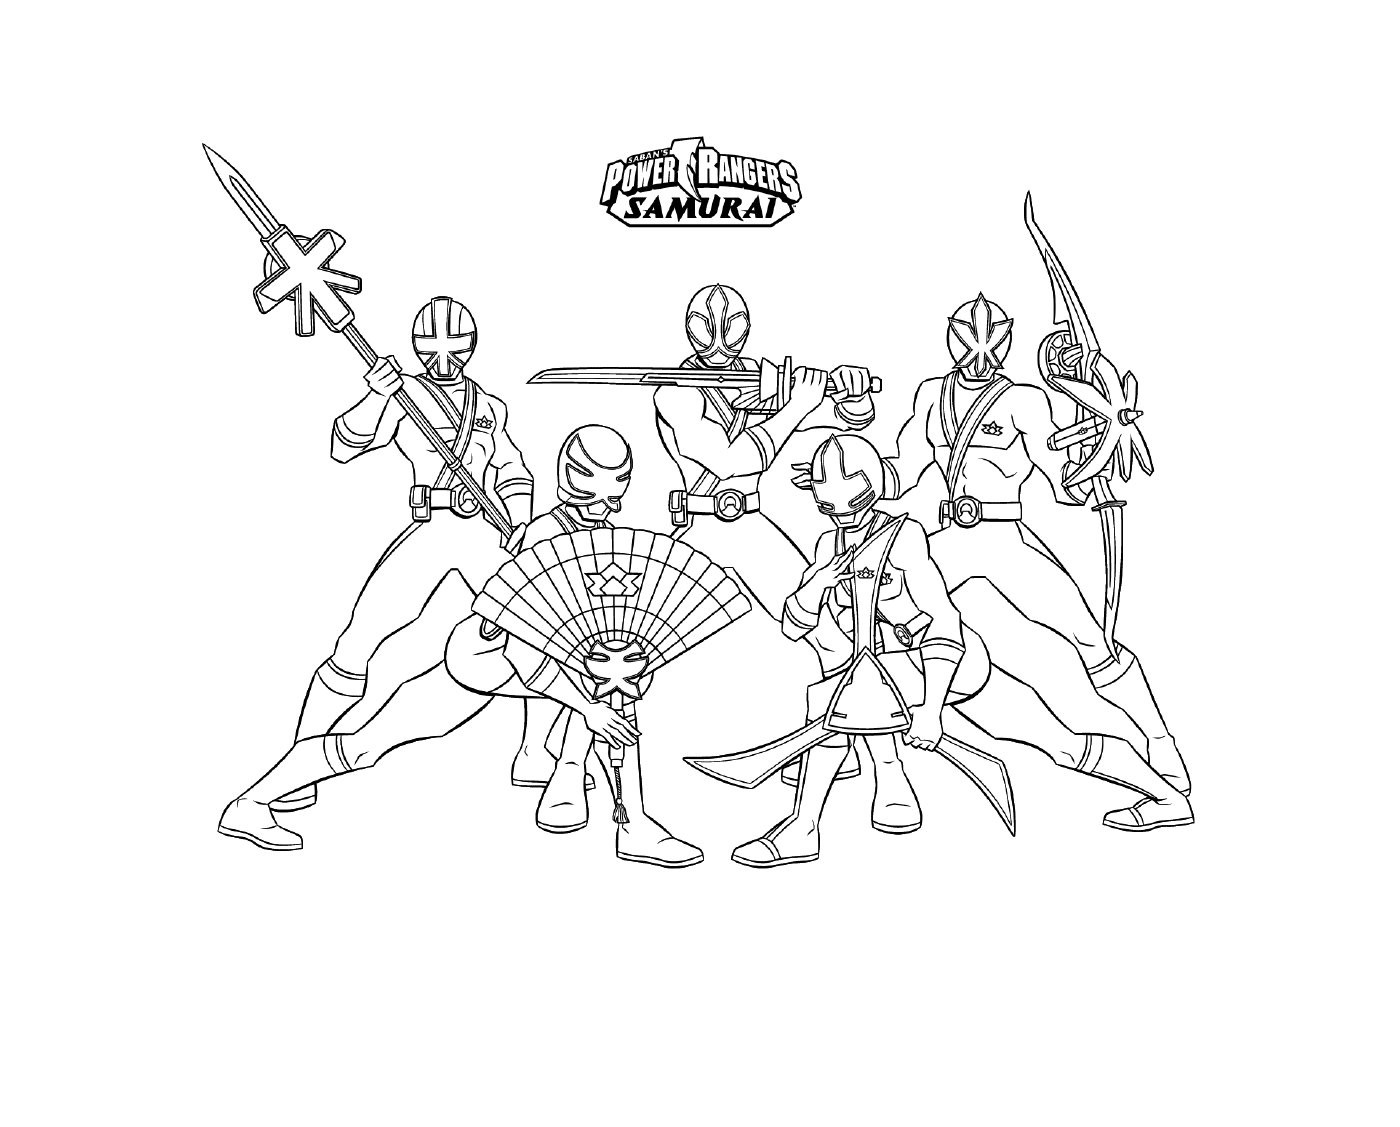  Equipe de Power Rangers Samurai 